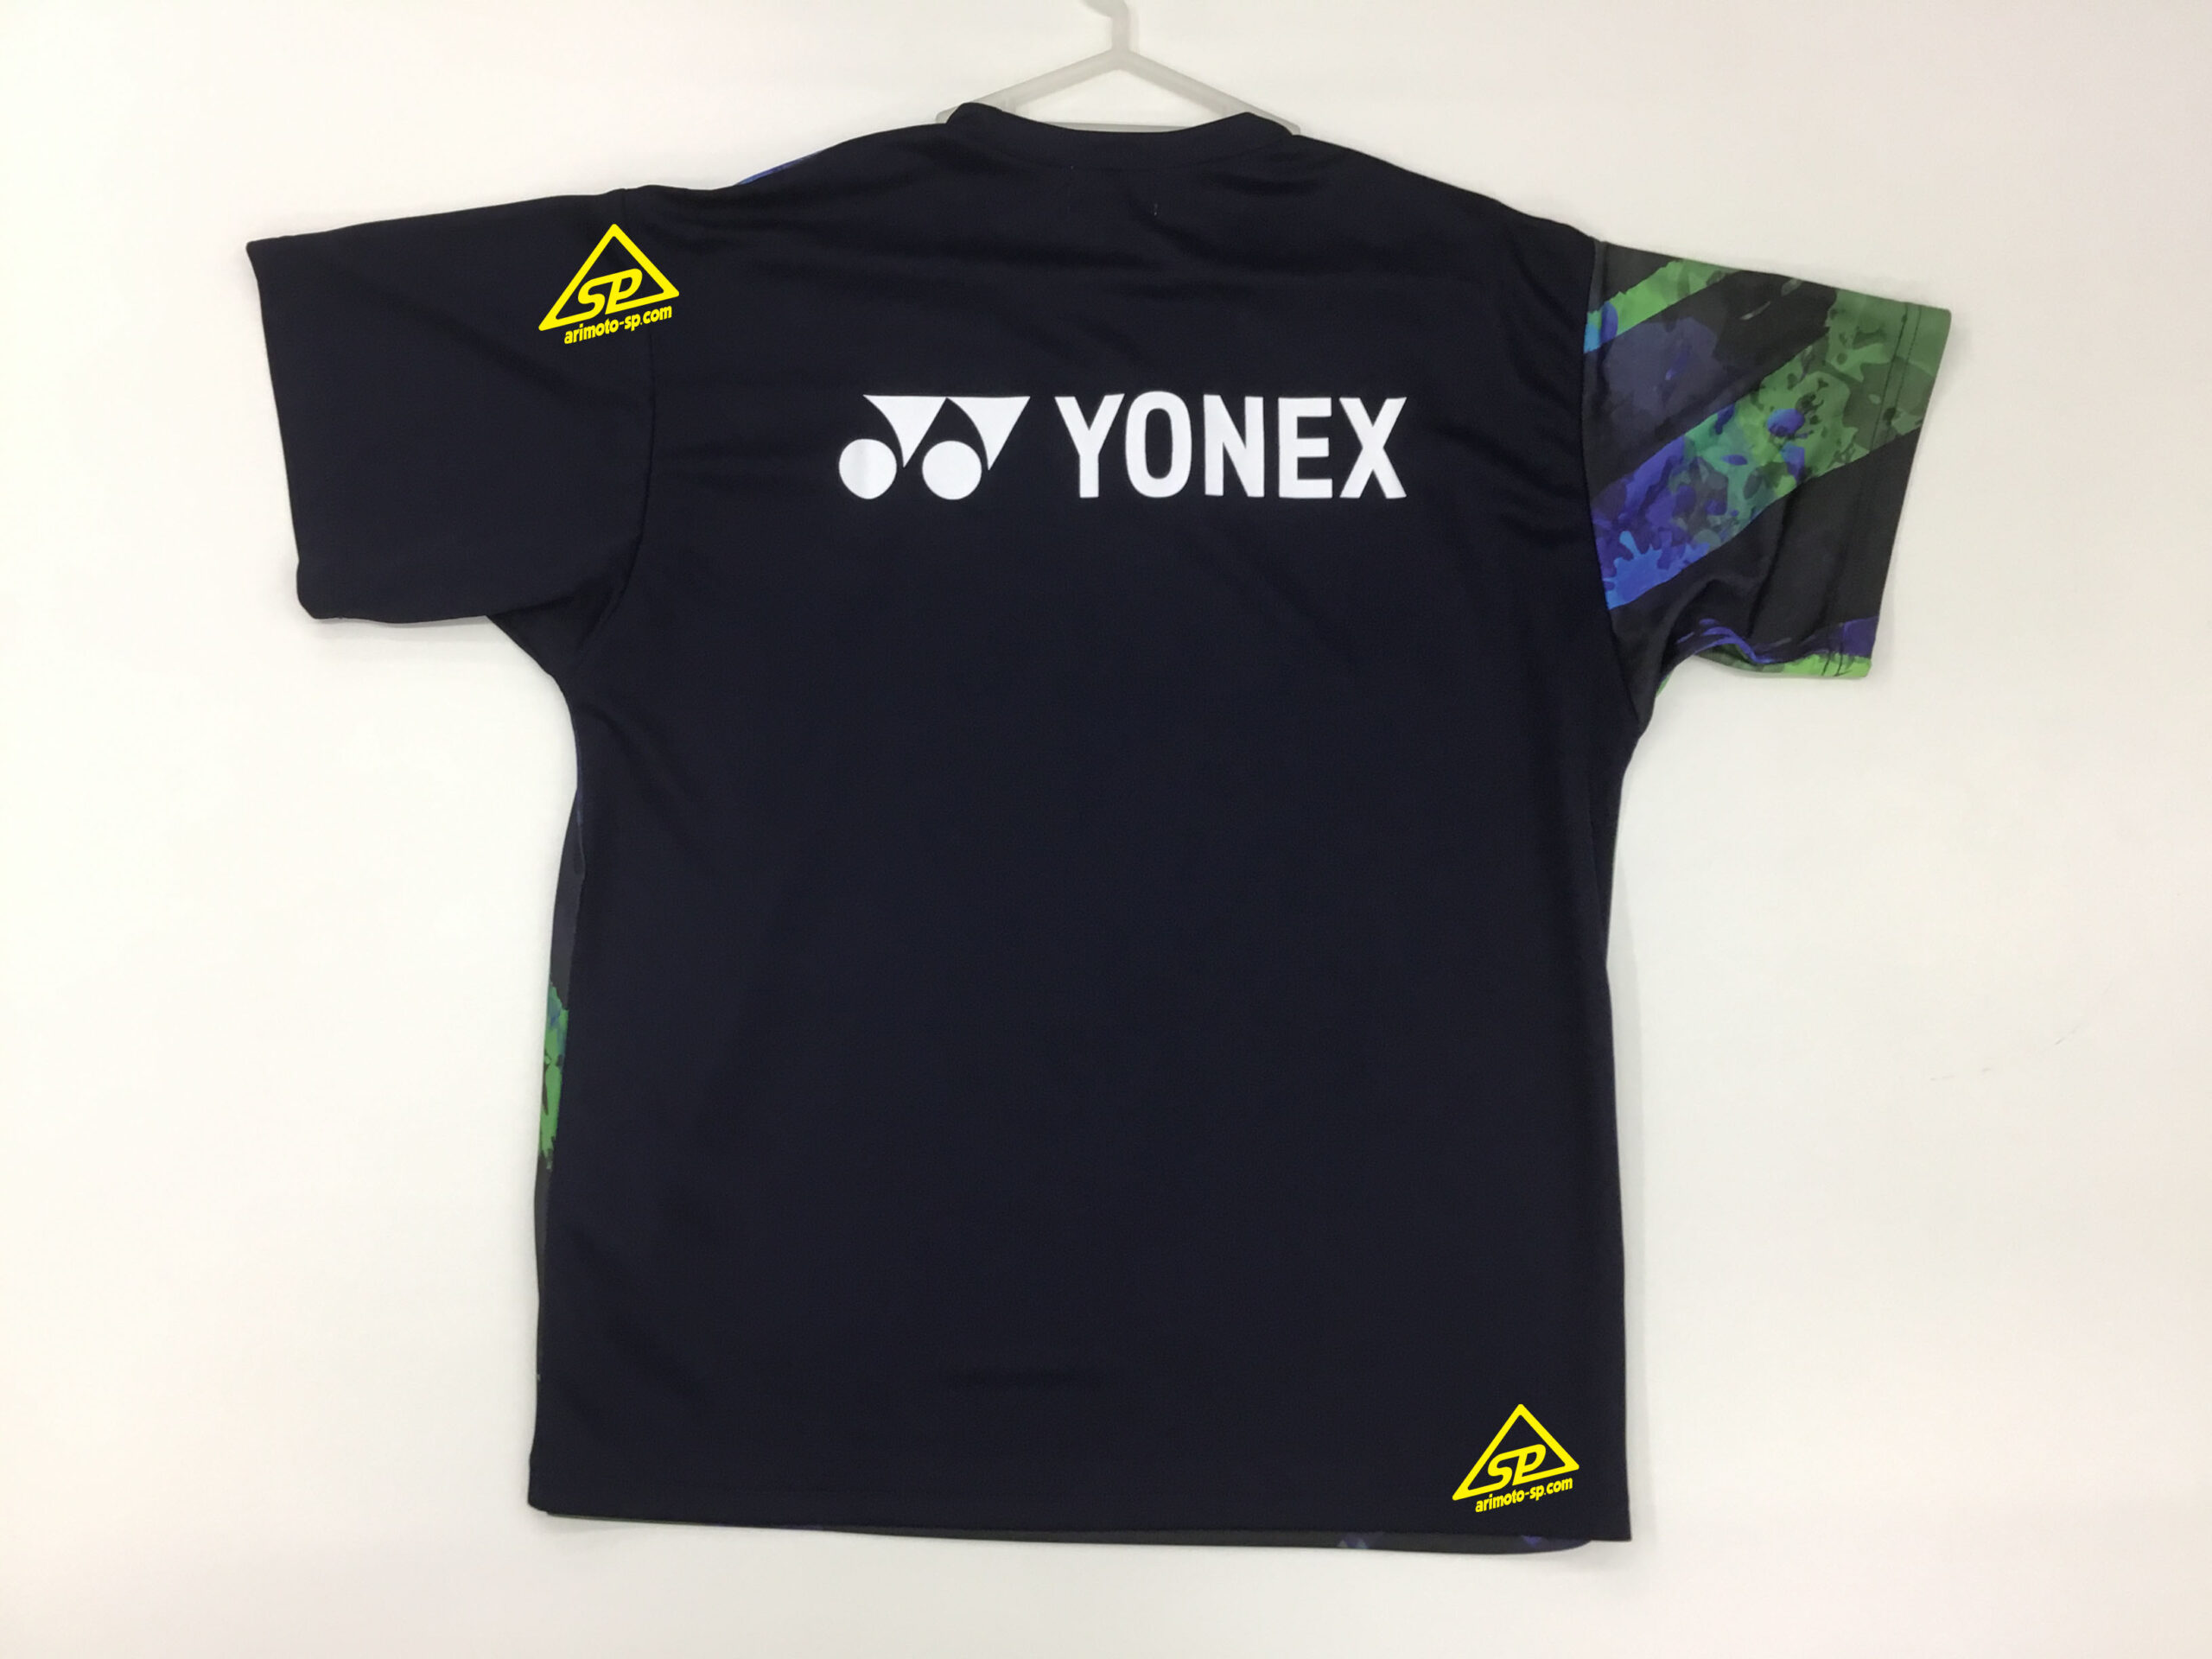 YONEX 昇華プリント 限定Tシャツ YOB21005 入荷しました。 